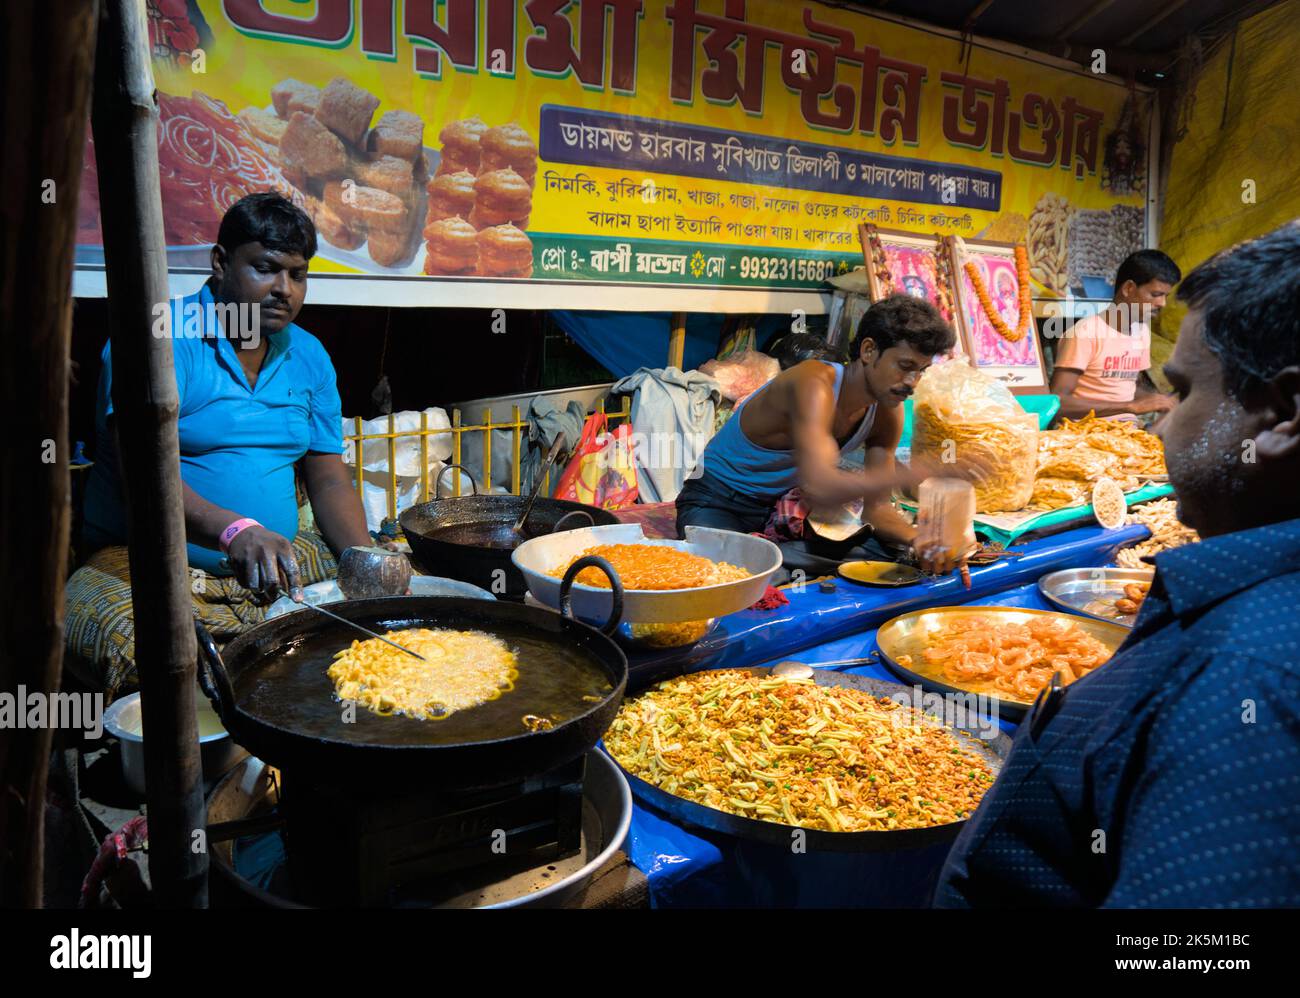 Indian Street Food seller selling food at Roadside food stall Stock Photo